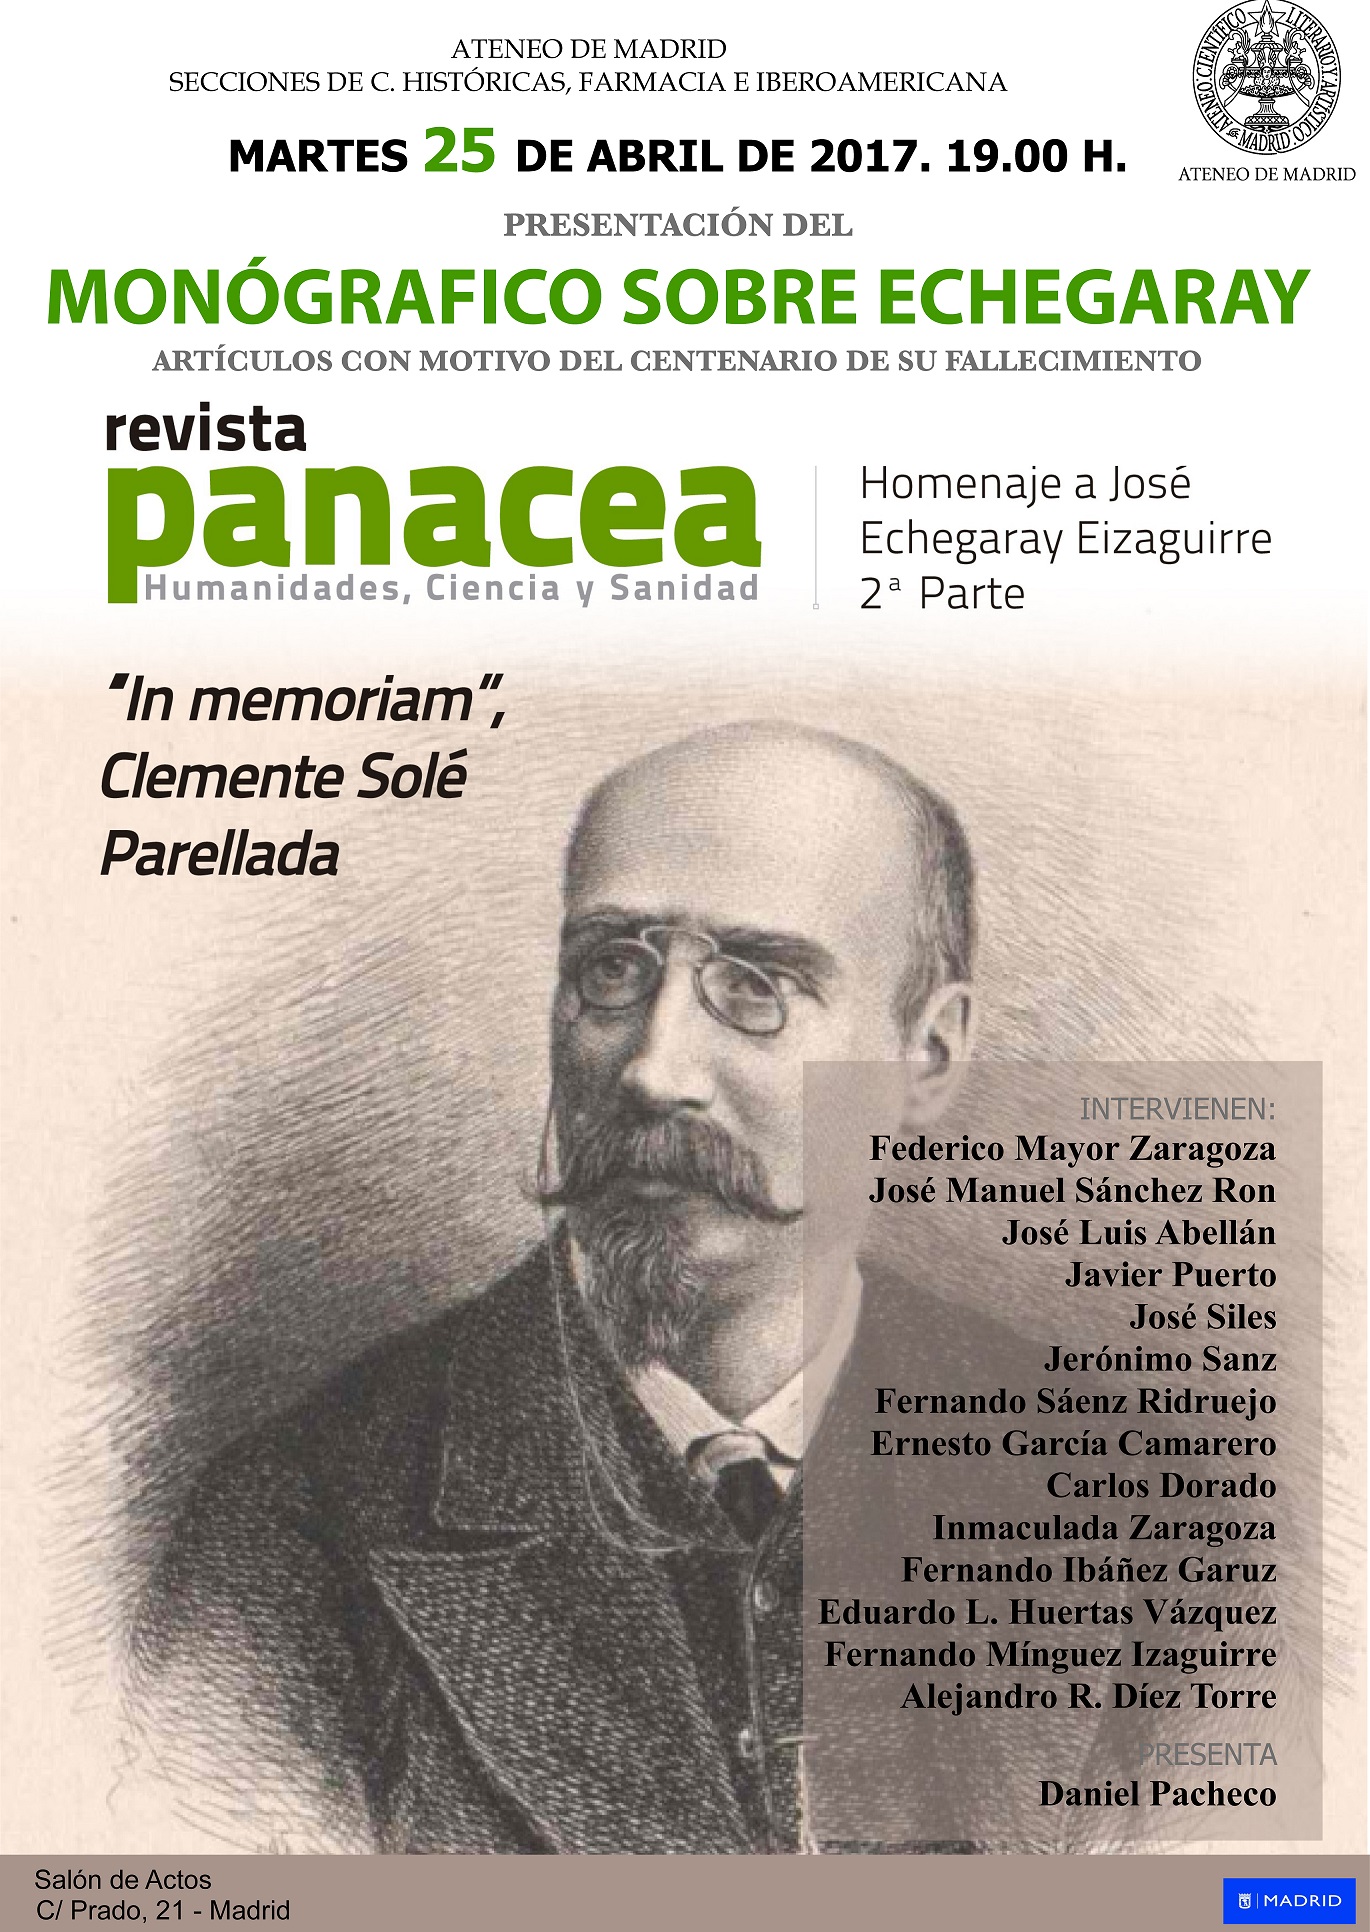 Tribute to José Echegaray Eizaguirre